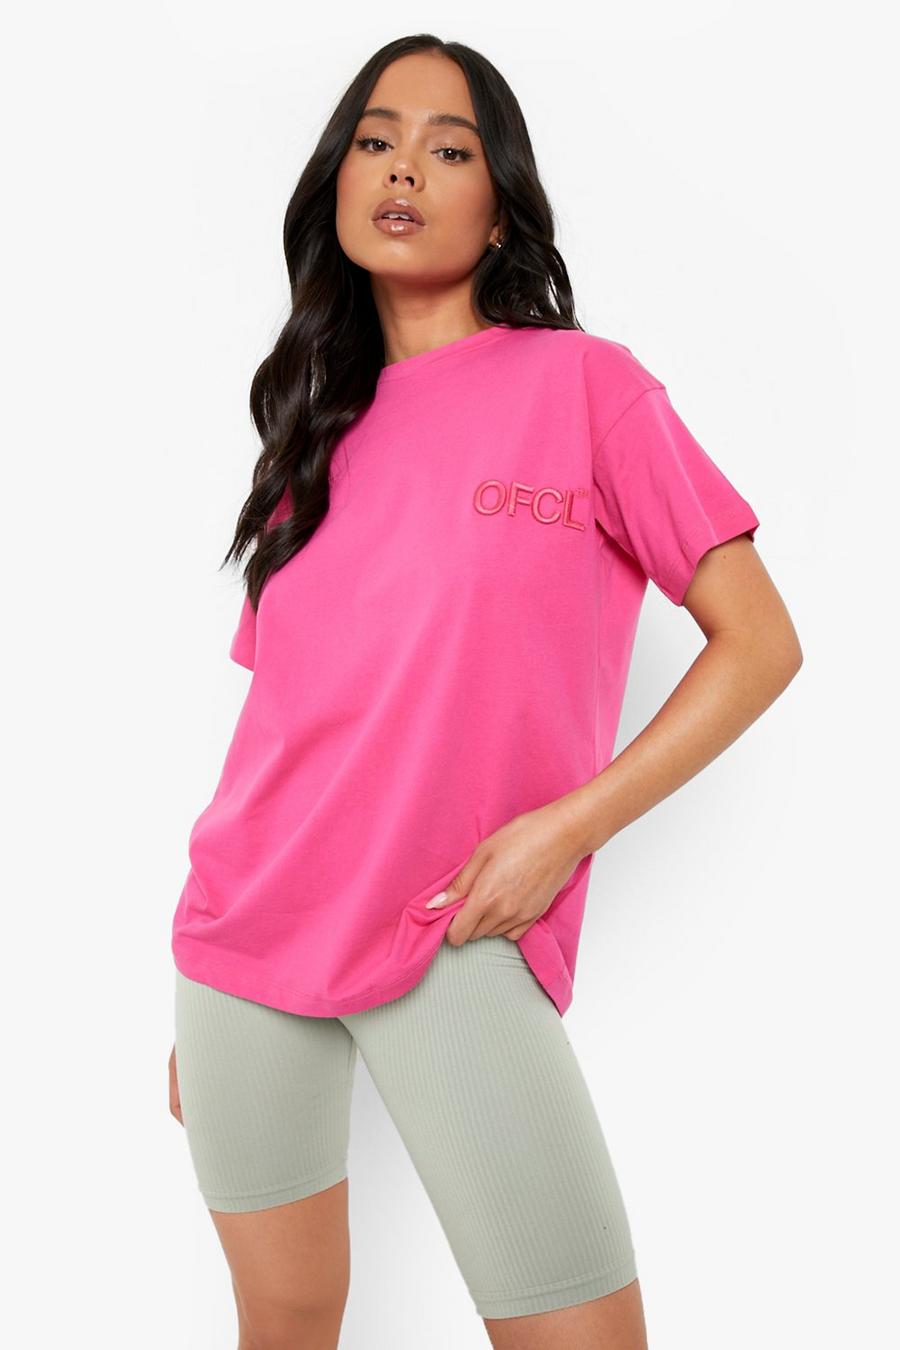 Camiseta Petite con bordado Ofcl, Hot pink rosa